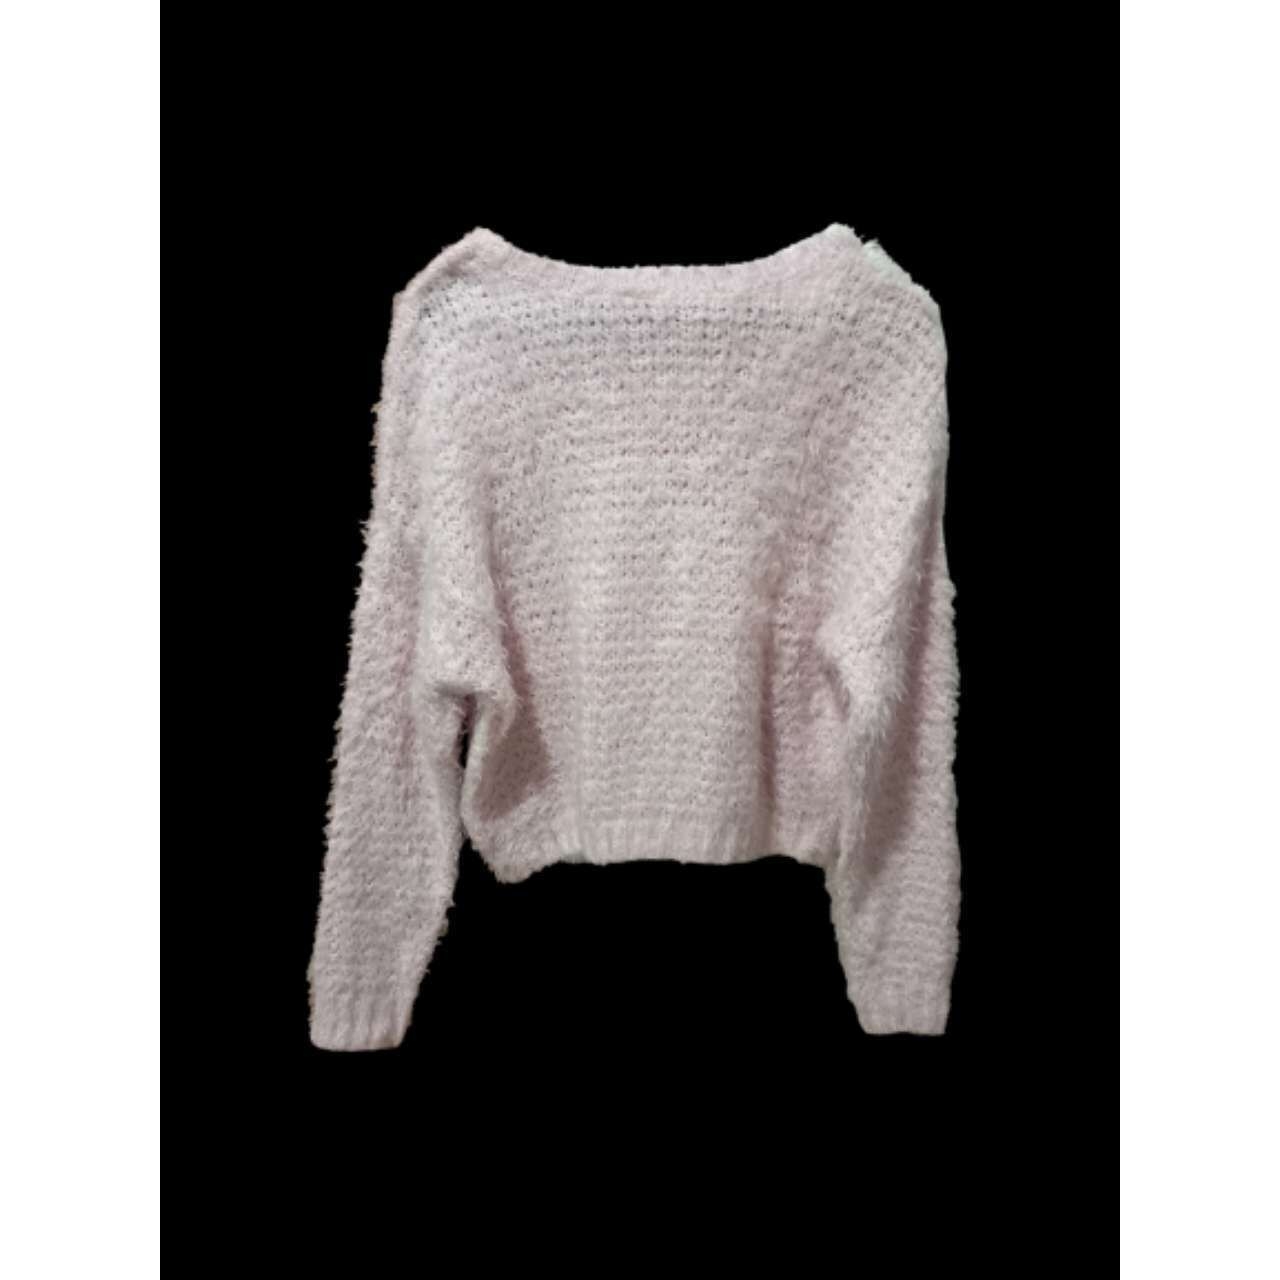 H&M Pink Sweater